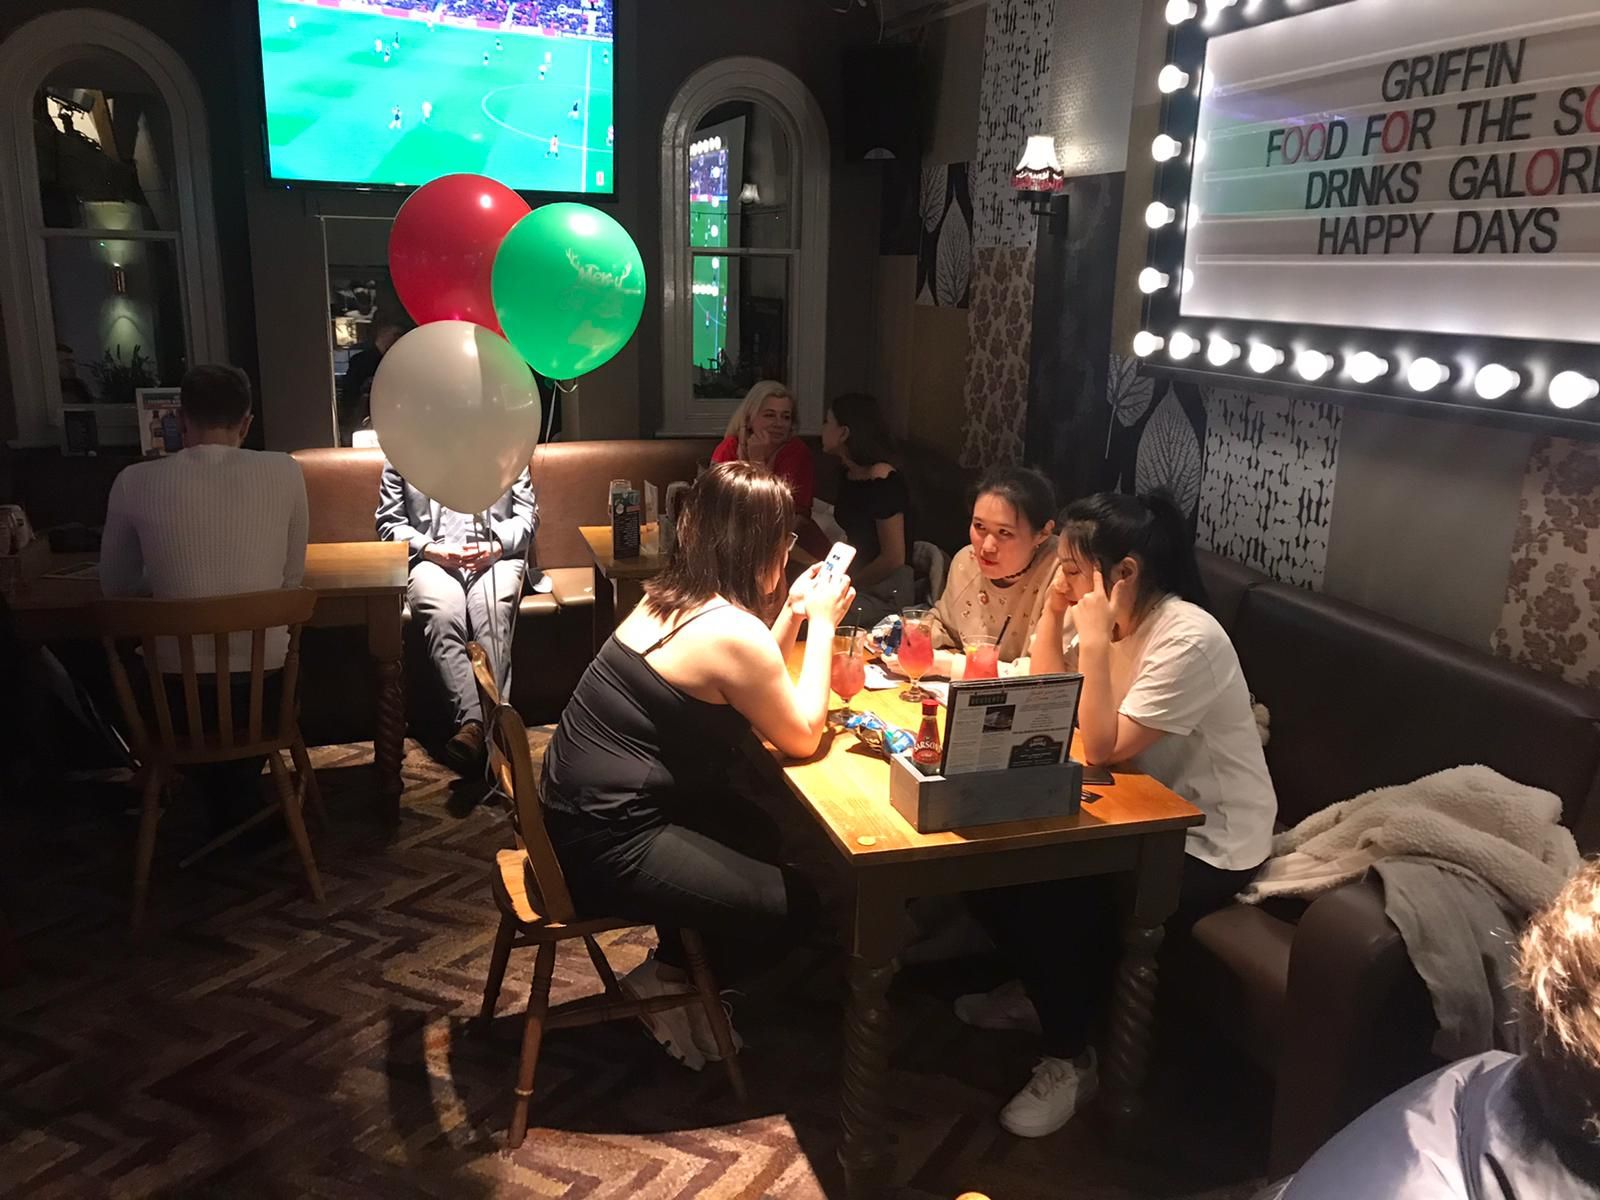 Loughborough Student Christmas Event - Baloons and football